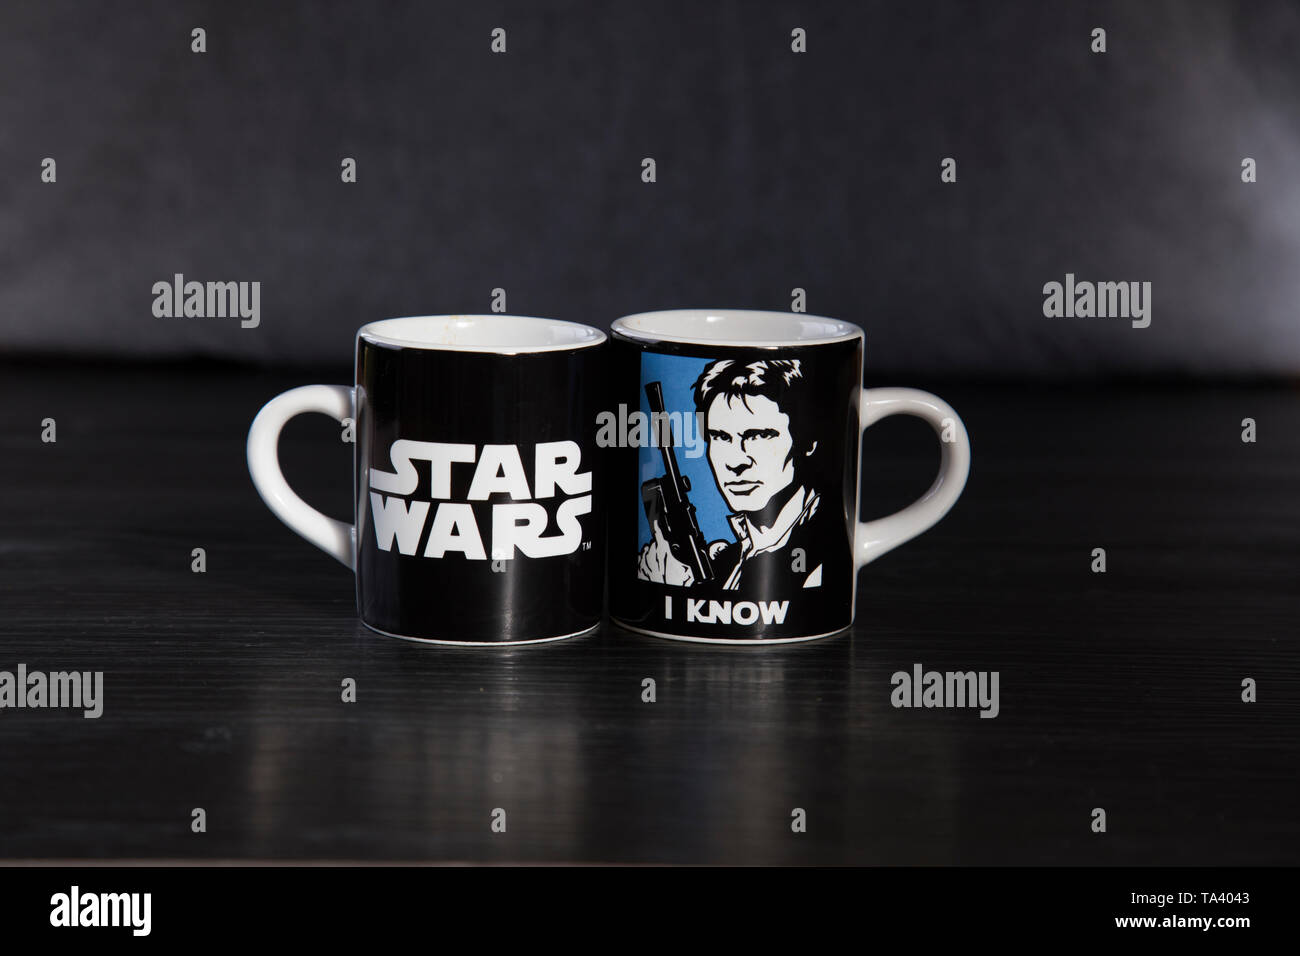 Espresso Set Leia & Han Solo, STAR WARS, HMB